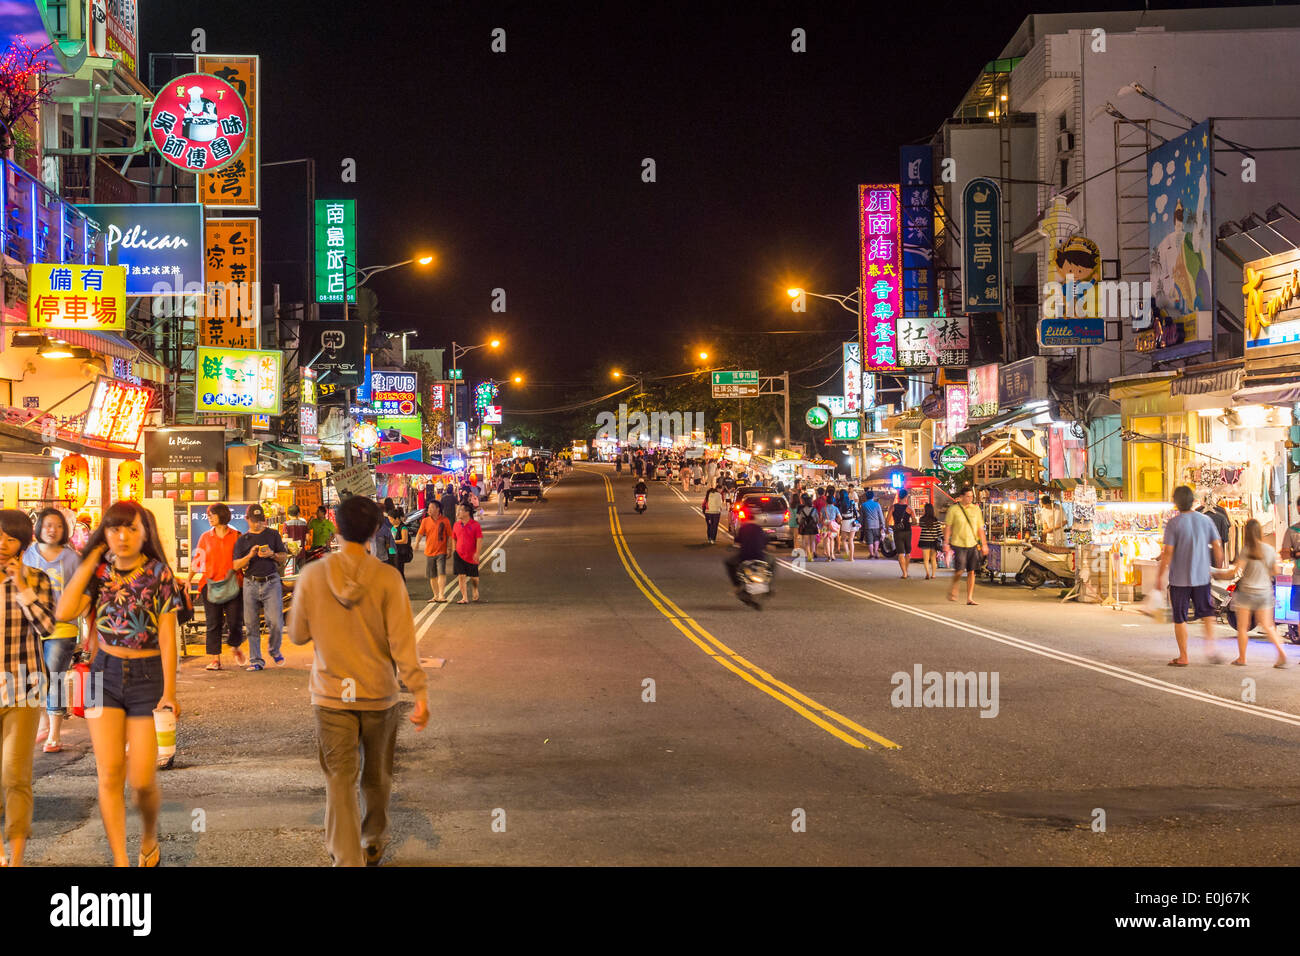 Kenting Night Market in Taiwan Stock Photo